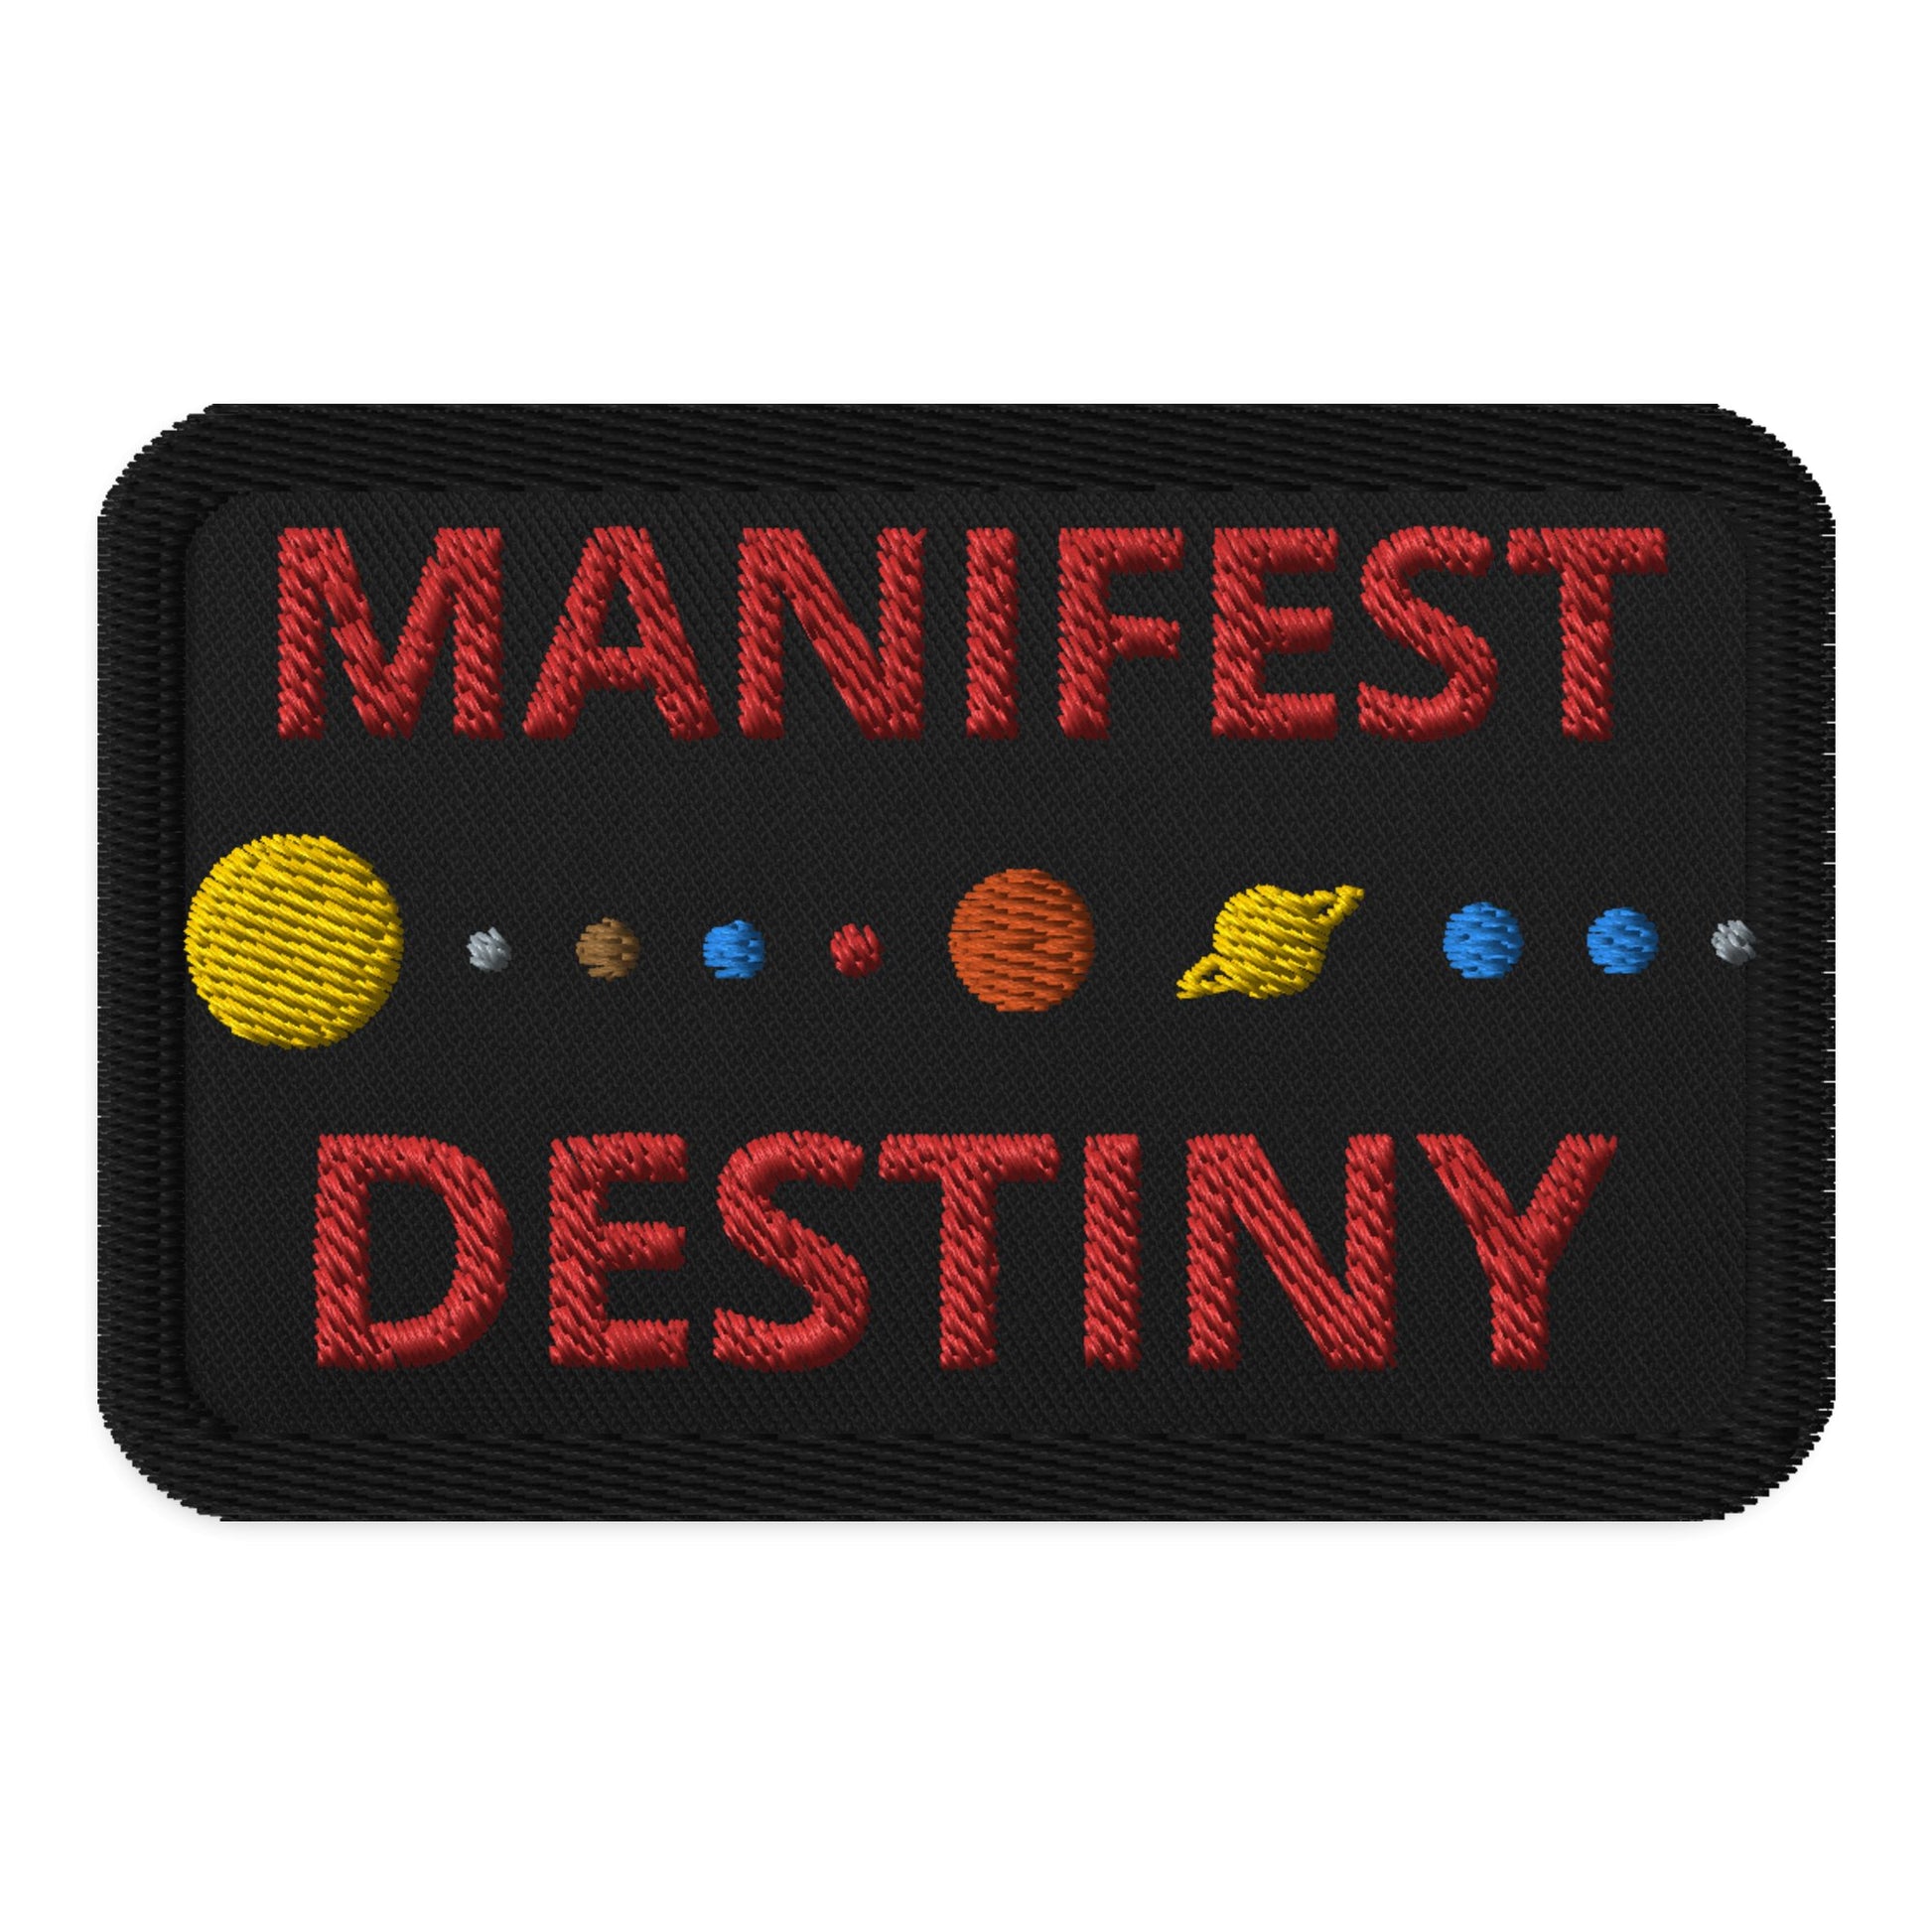 Artsy Patches: Manifest Destiny - Red Pawn Shop